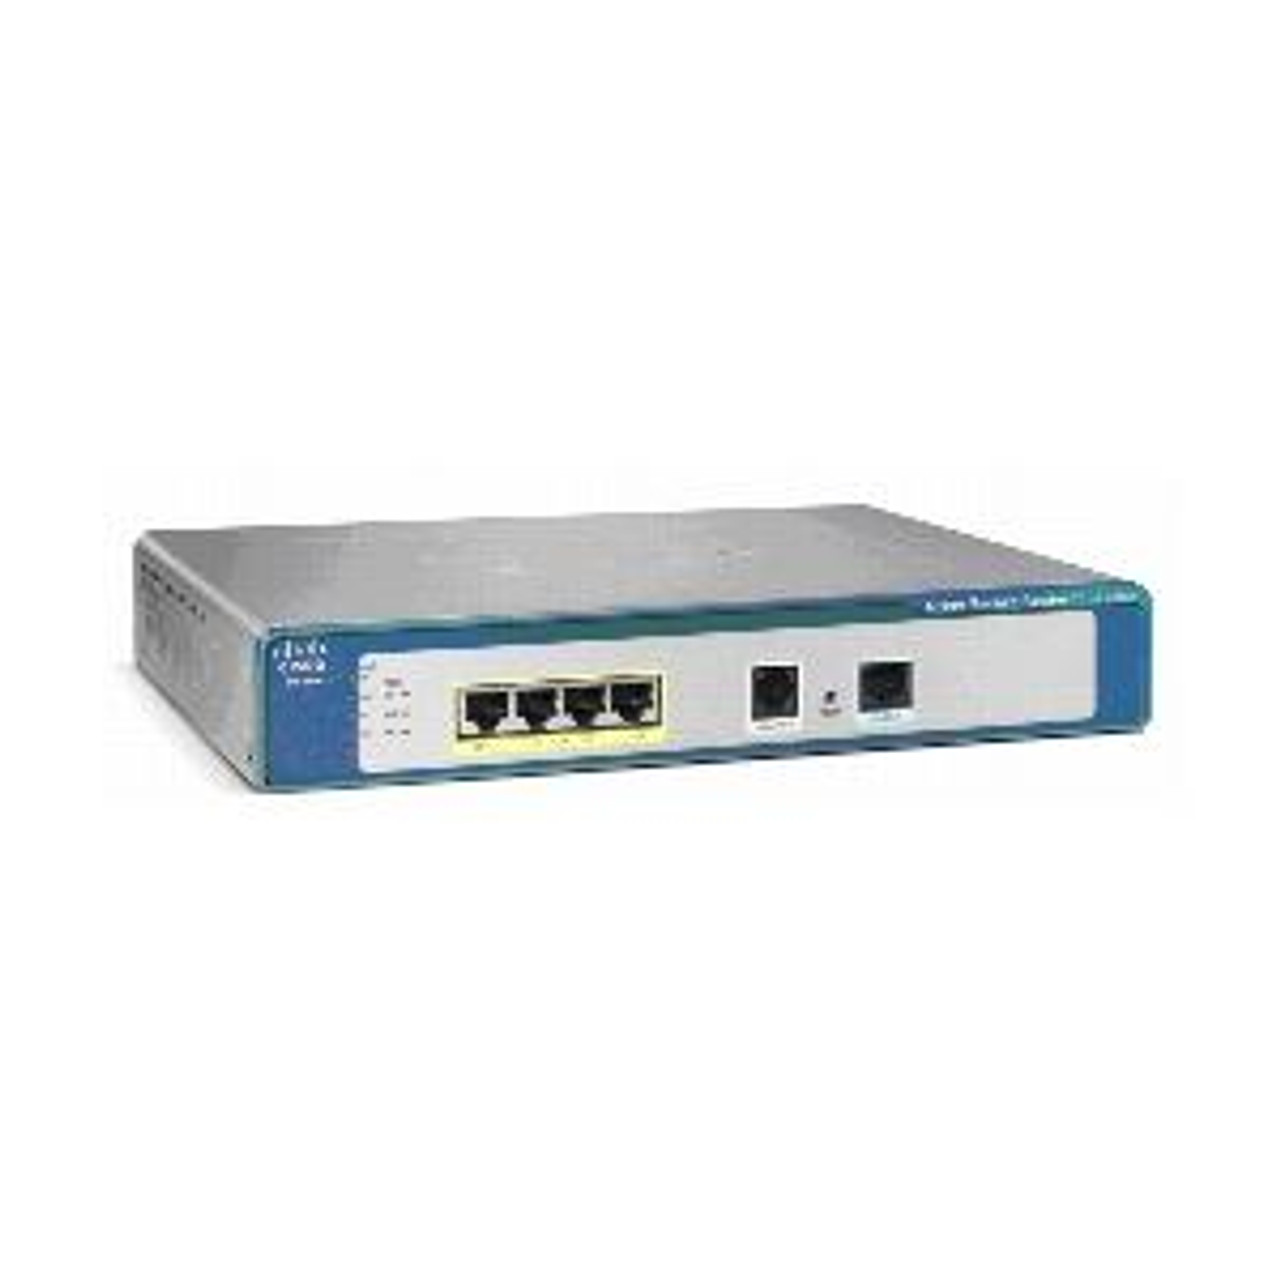 SR520-ADSL-K9 Cisco SR520 4-port Secure Router 1 x ADSL WAN, 4 x 10/100Base-TX LAN (Refurbished)